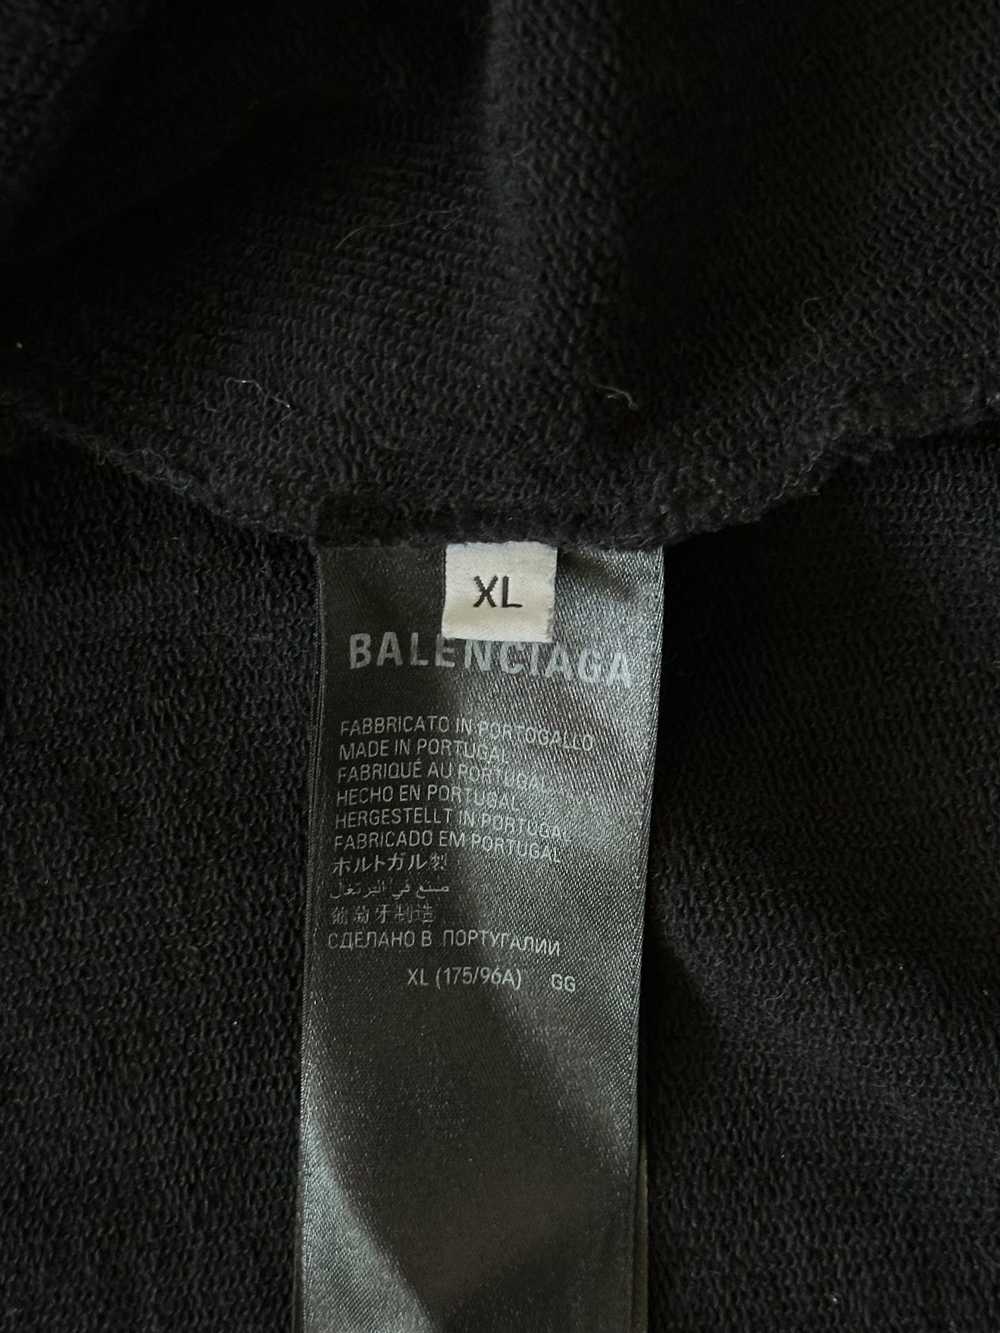 Balenciaga See Now Buy Now Zip Up - image 8